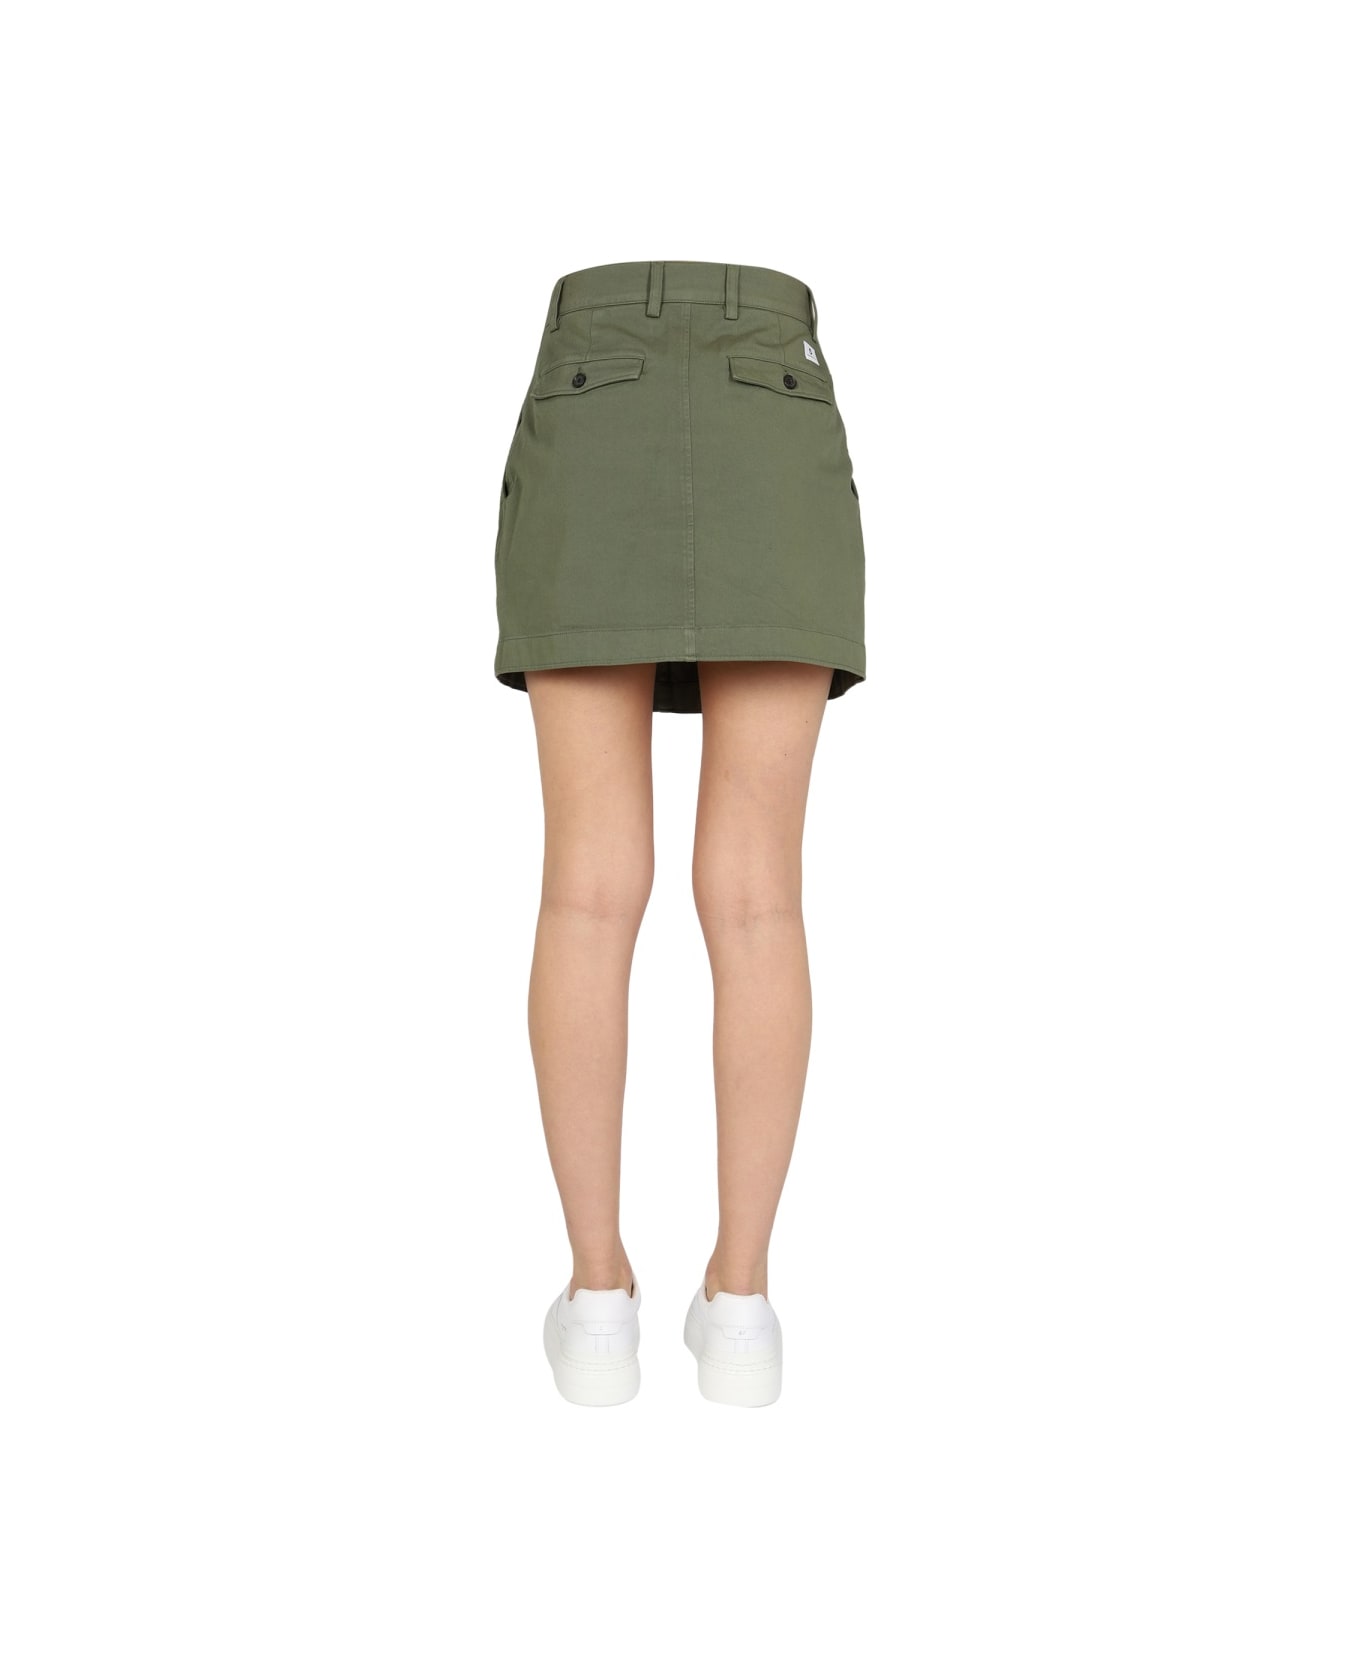 Department Five "sweta" Skirt - MILITARY GREEN